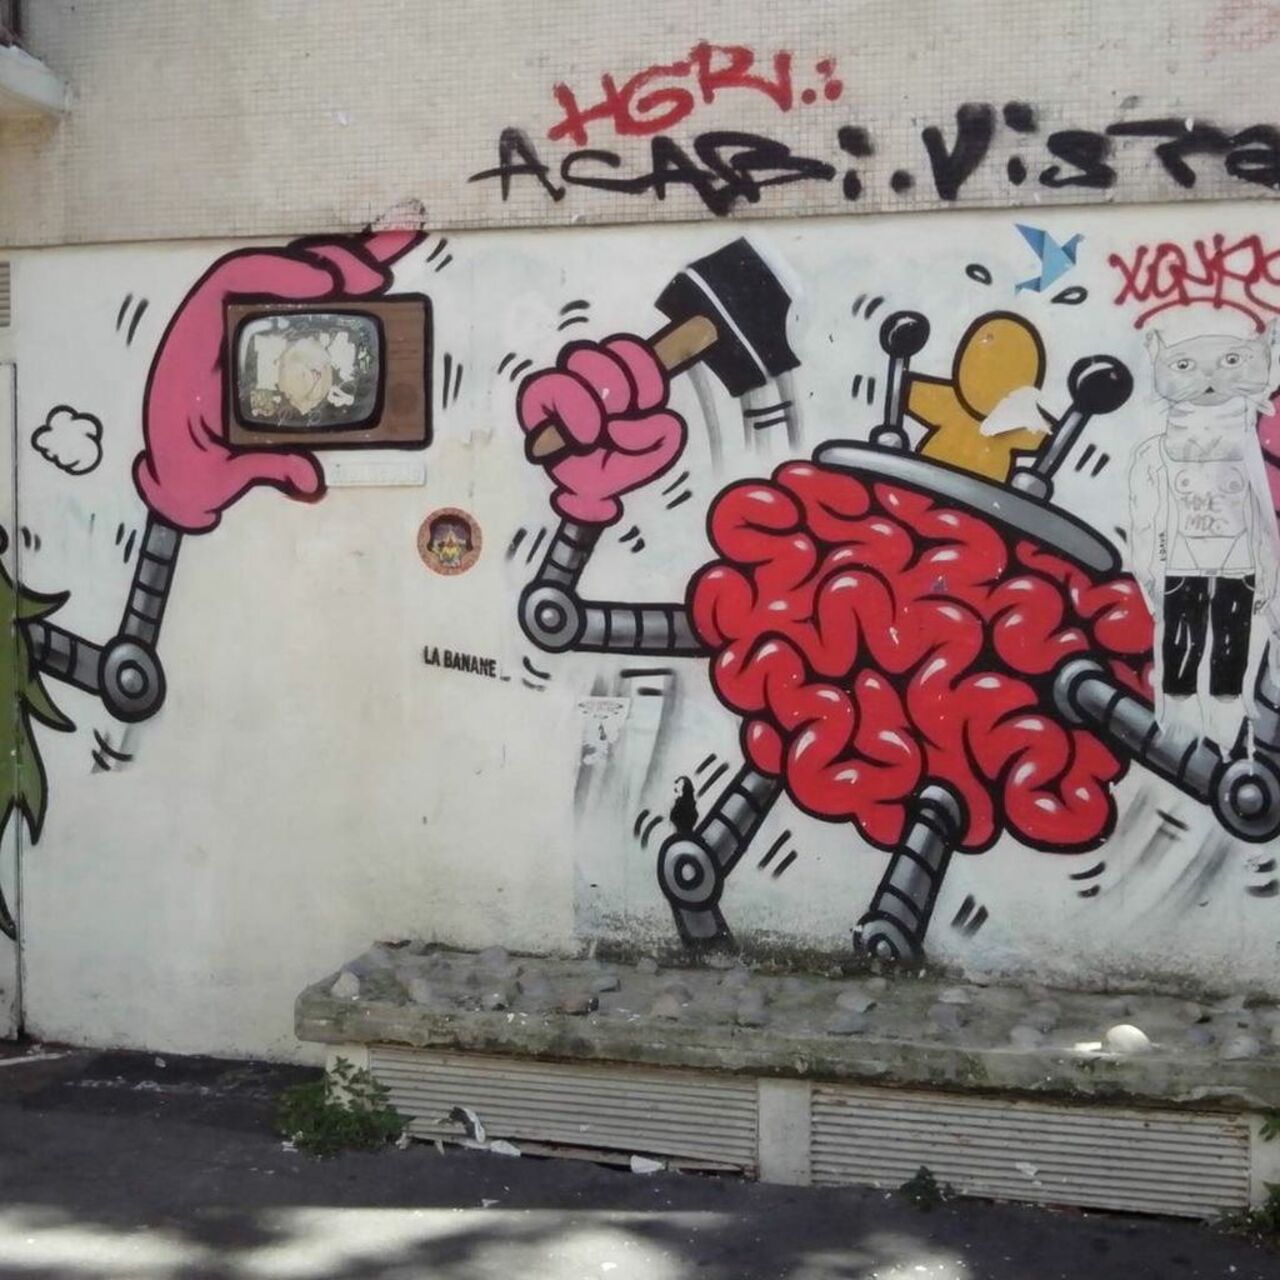 RT @StArtEverywhere: #streetart #streetarteverywhere #streetshot #graffitiart #graffiti #arturbain #urbanart  #mur #mural #wall #wallart… https://t.co/4aBkcHgg73